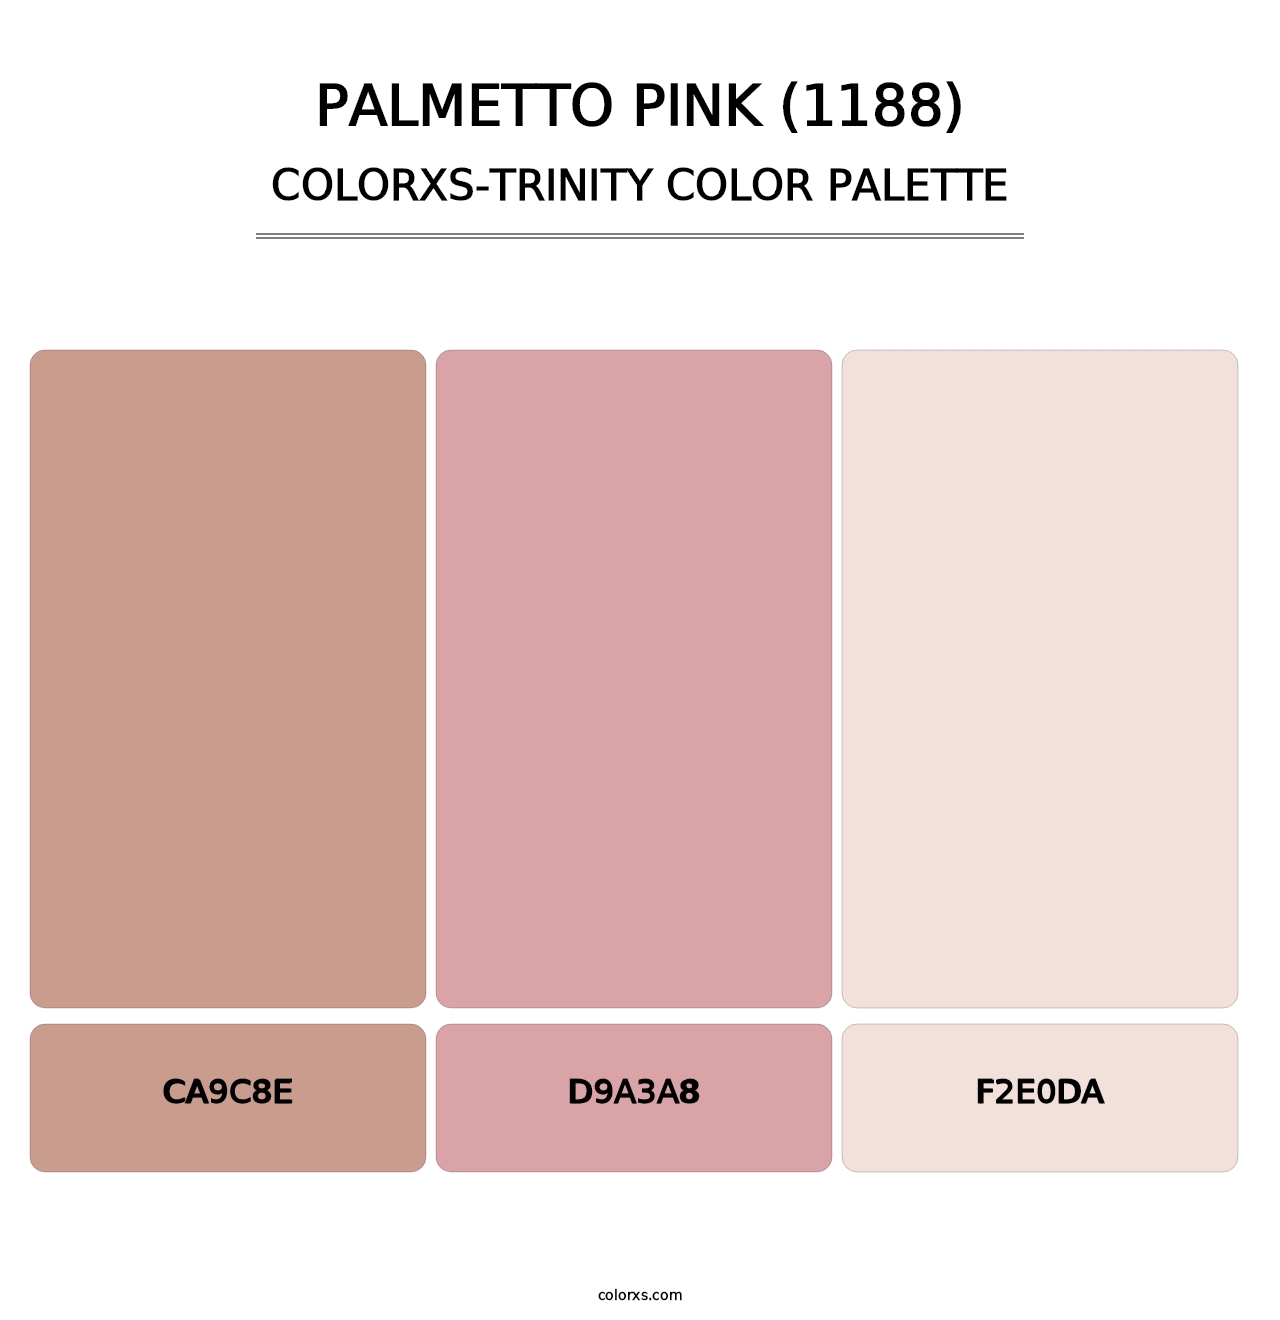 Palmetto Pink (1188) - Colorxs Trinity Palette